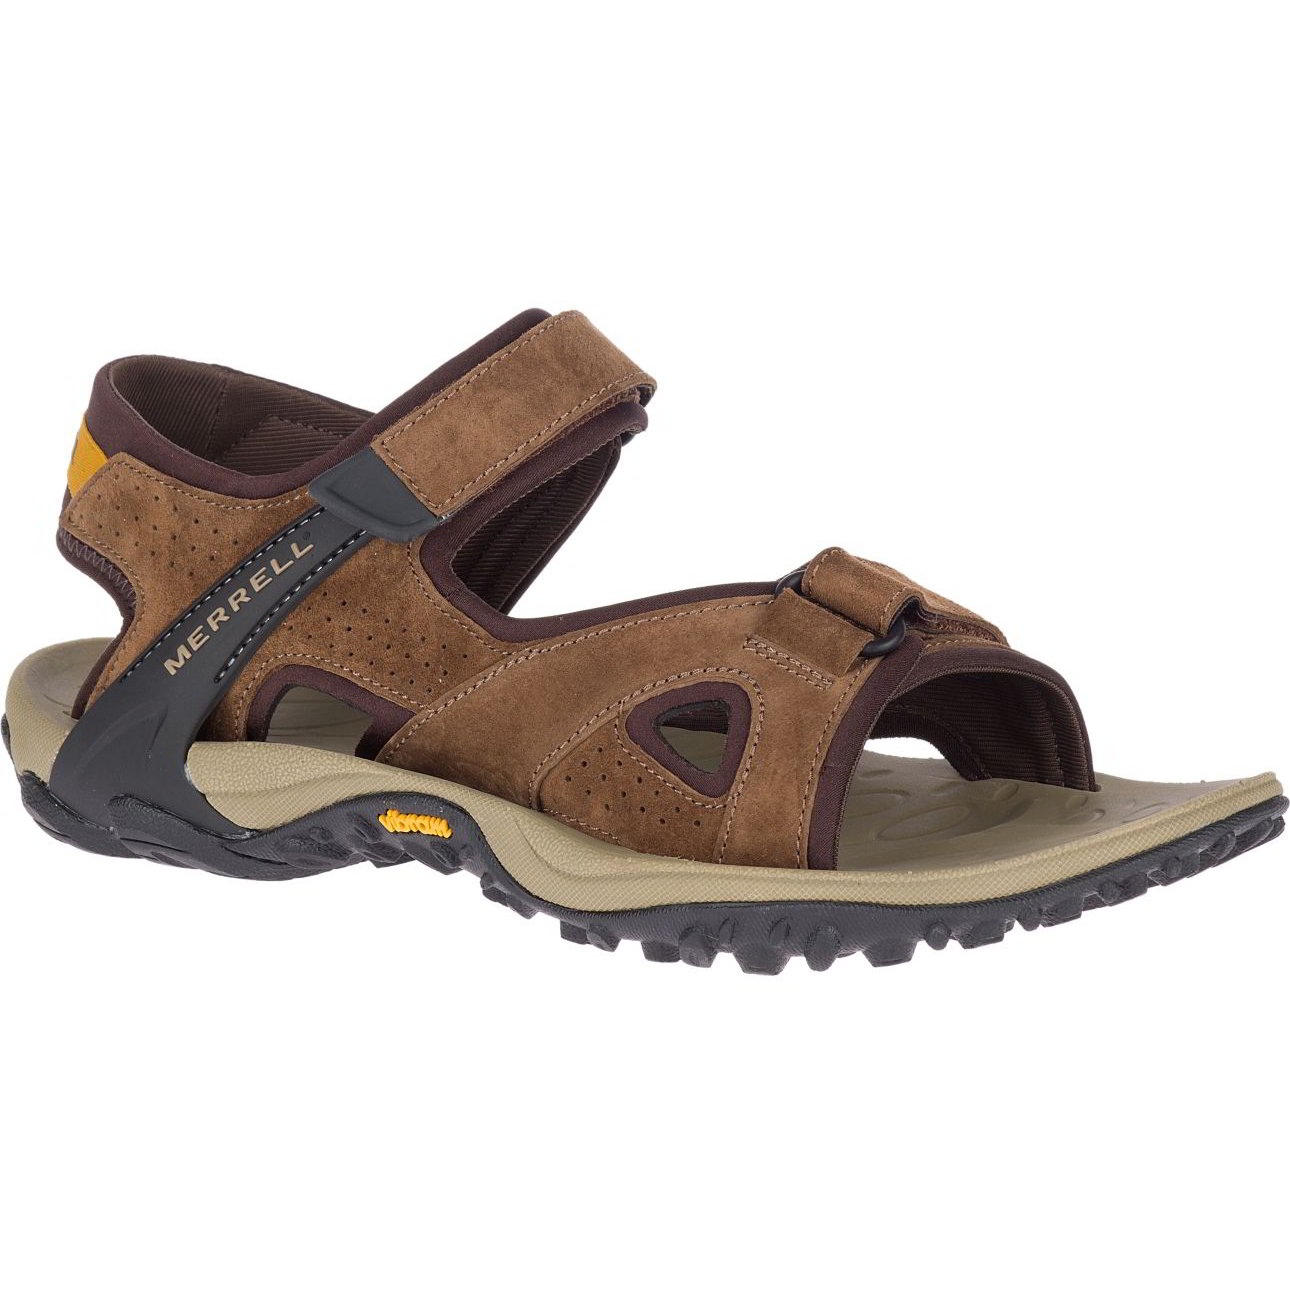 Merrell Mens Kahuna 4 Walking Sandals - UK 7 Brown 2951